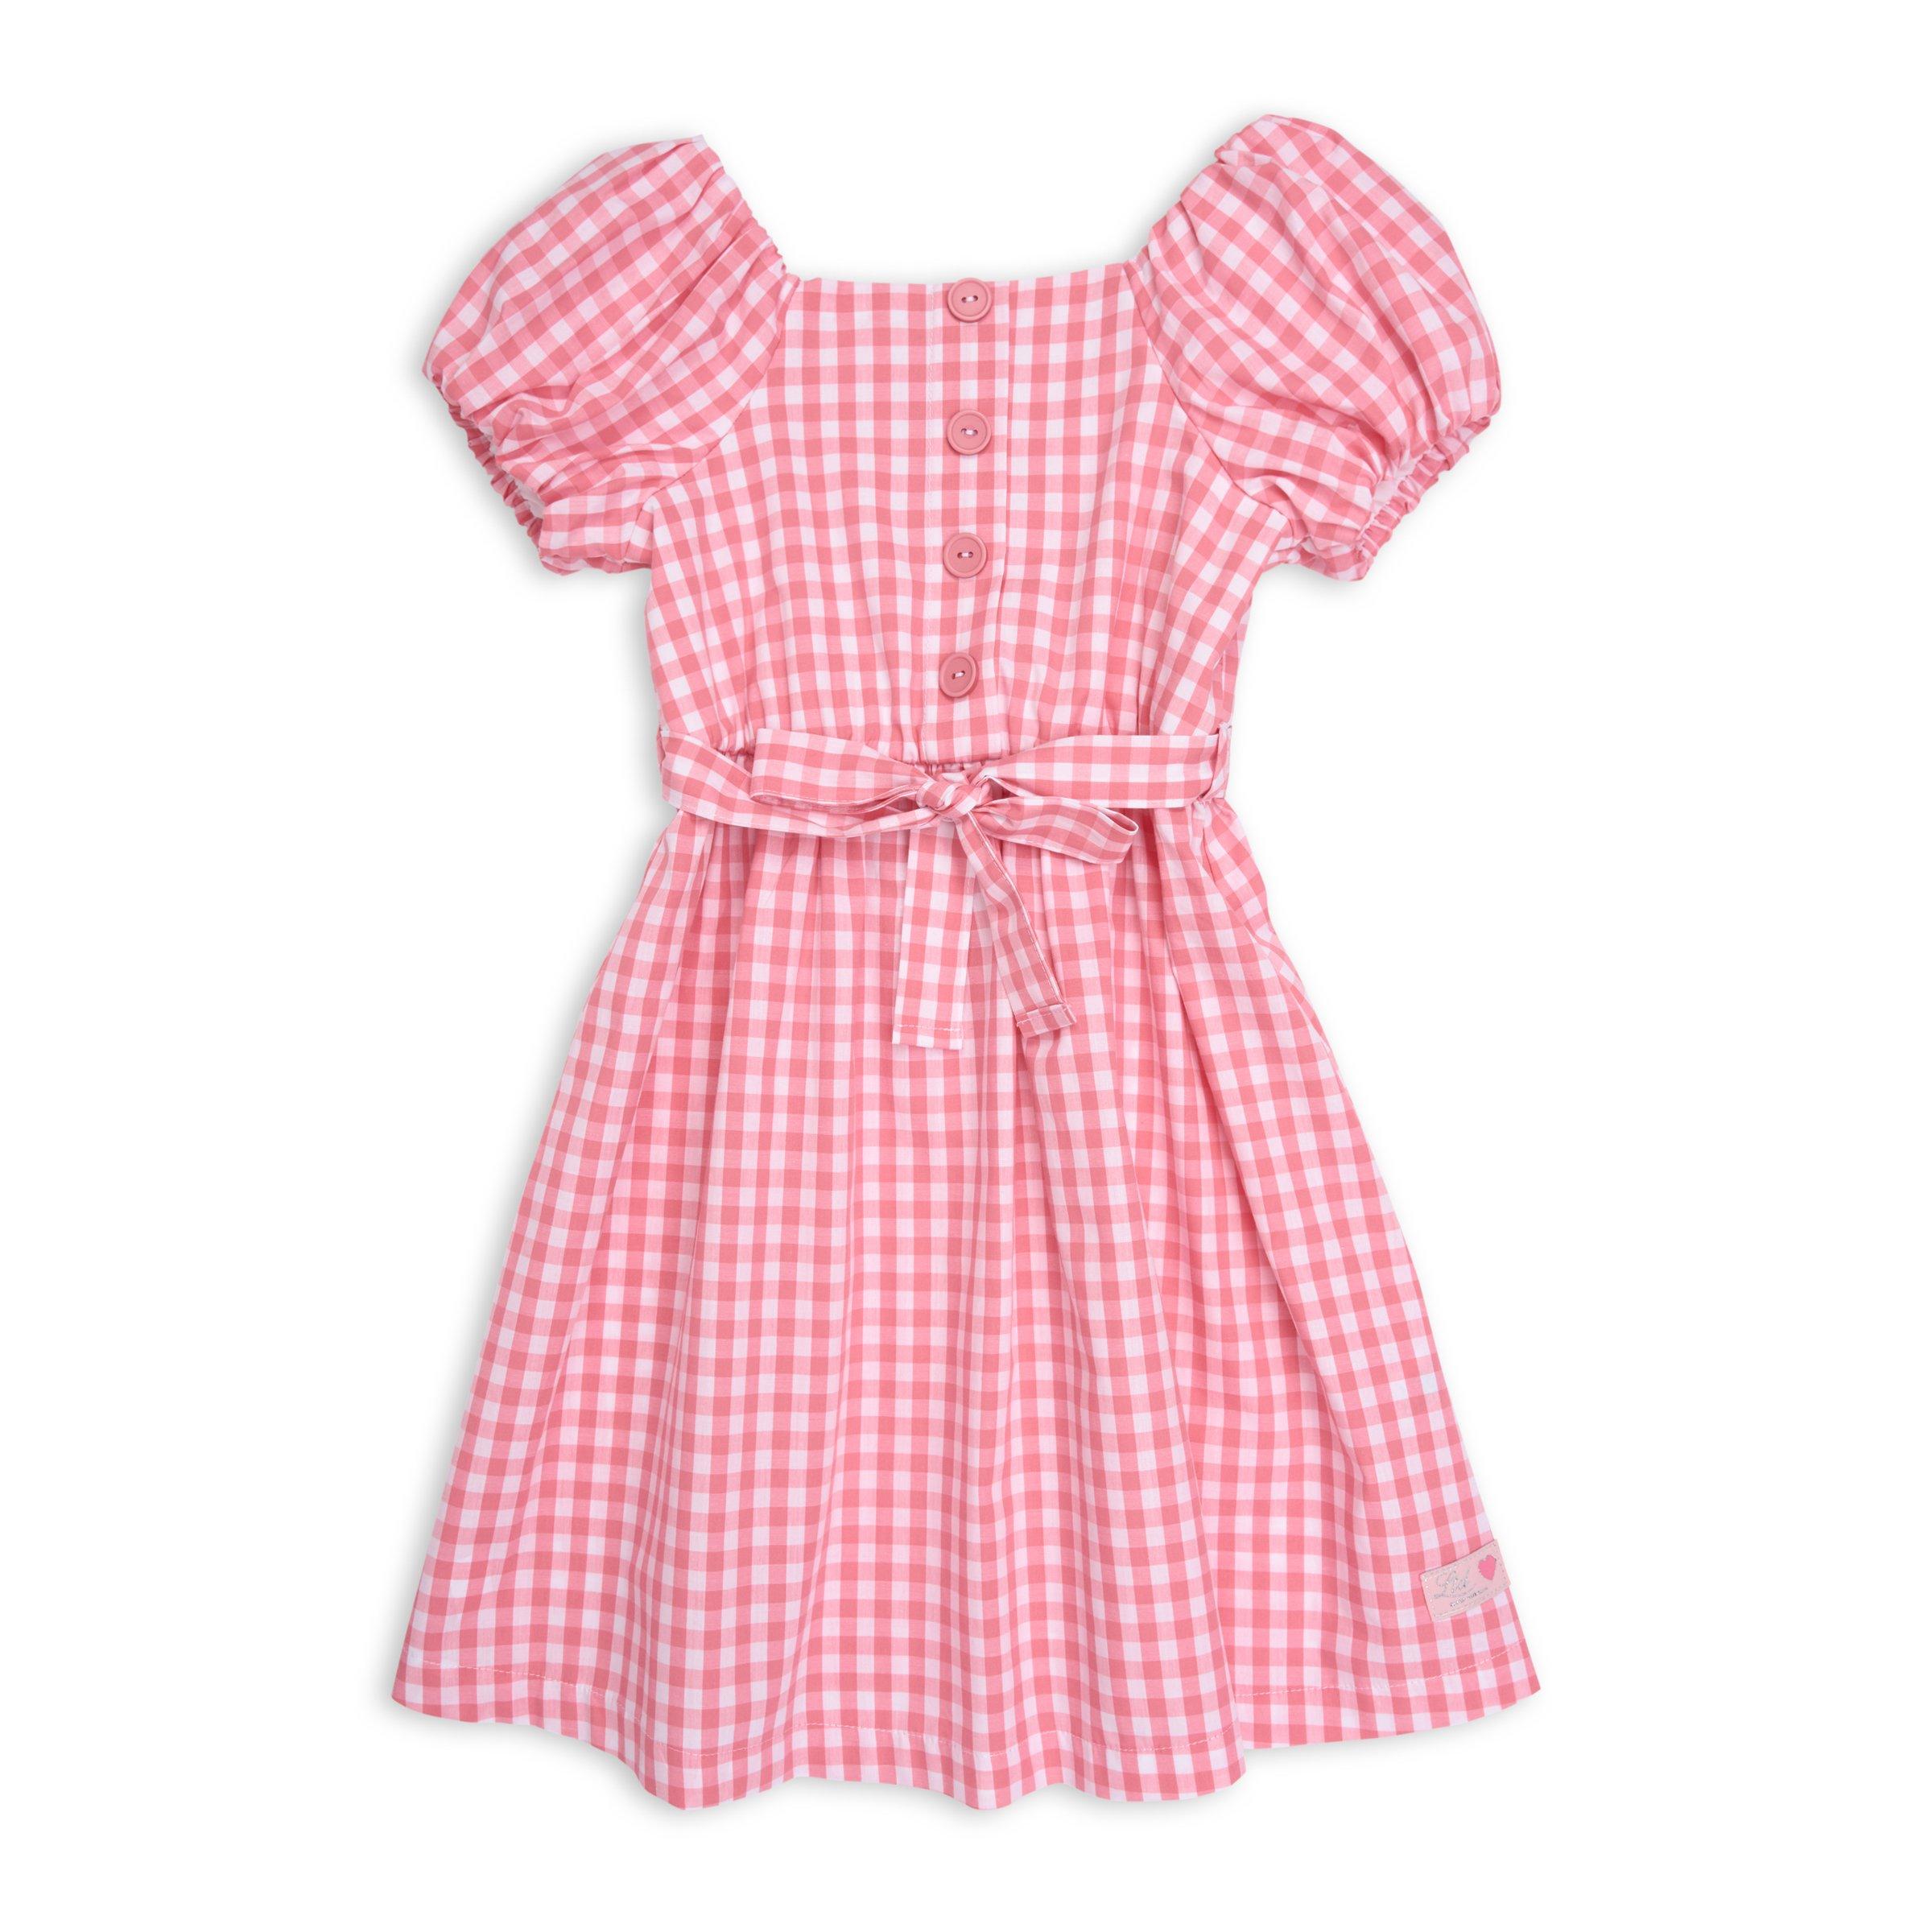 Buy LTD Kids Kid Girl Baby Doll Dress Online | Truworths